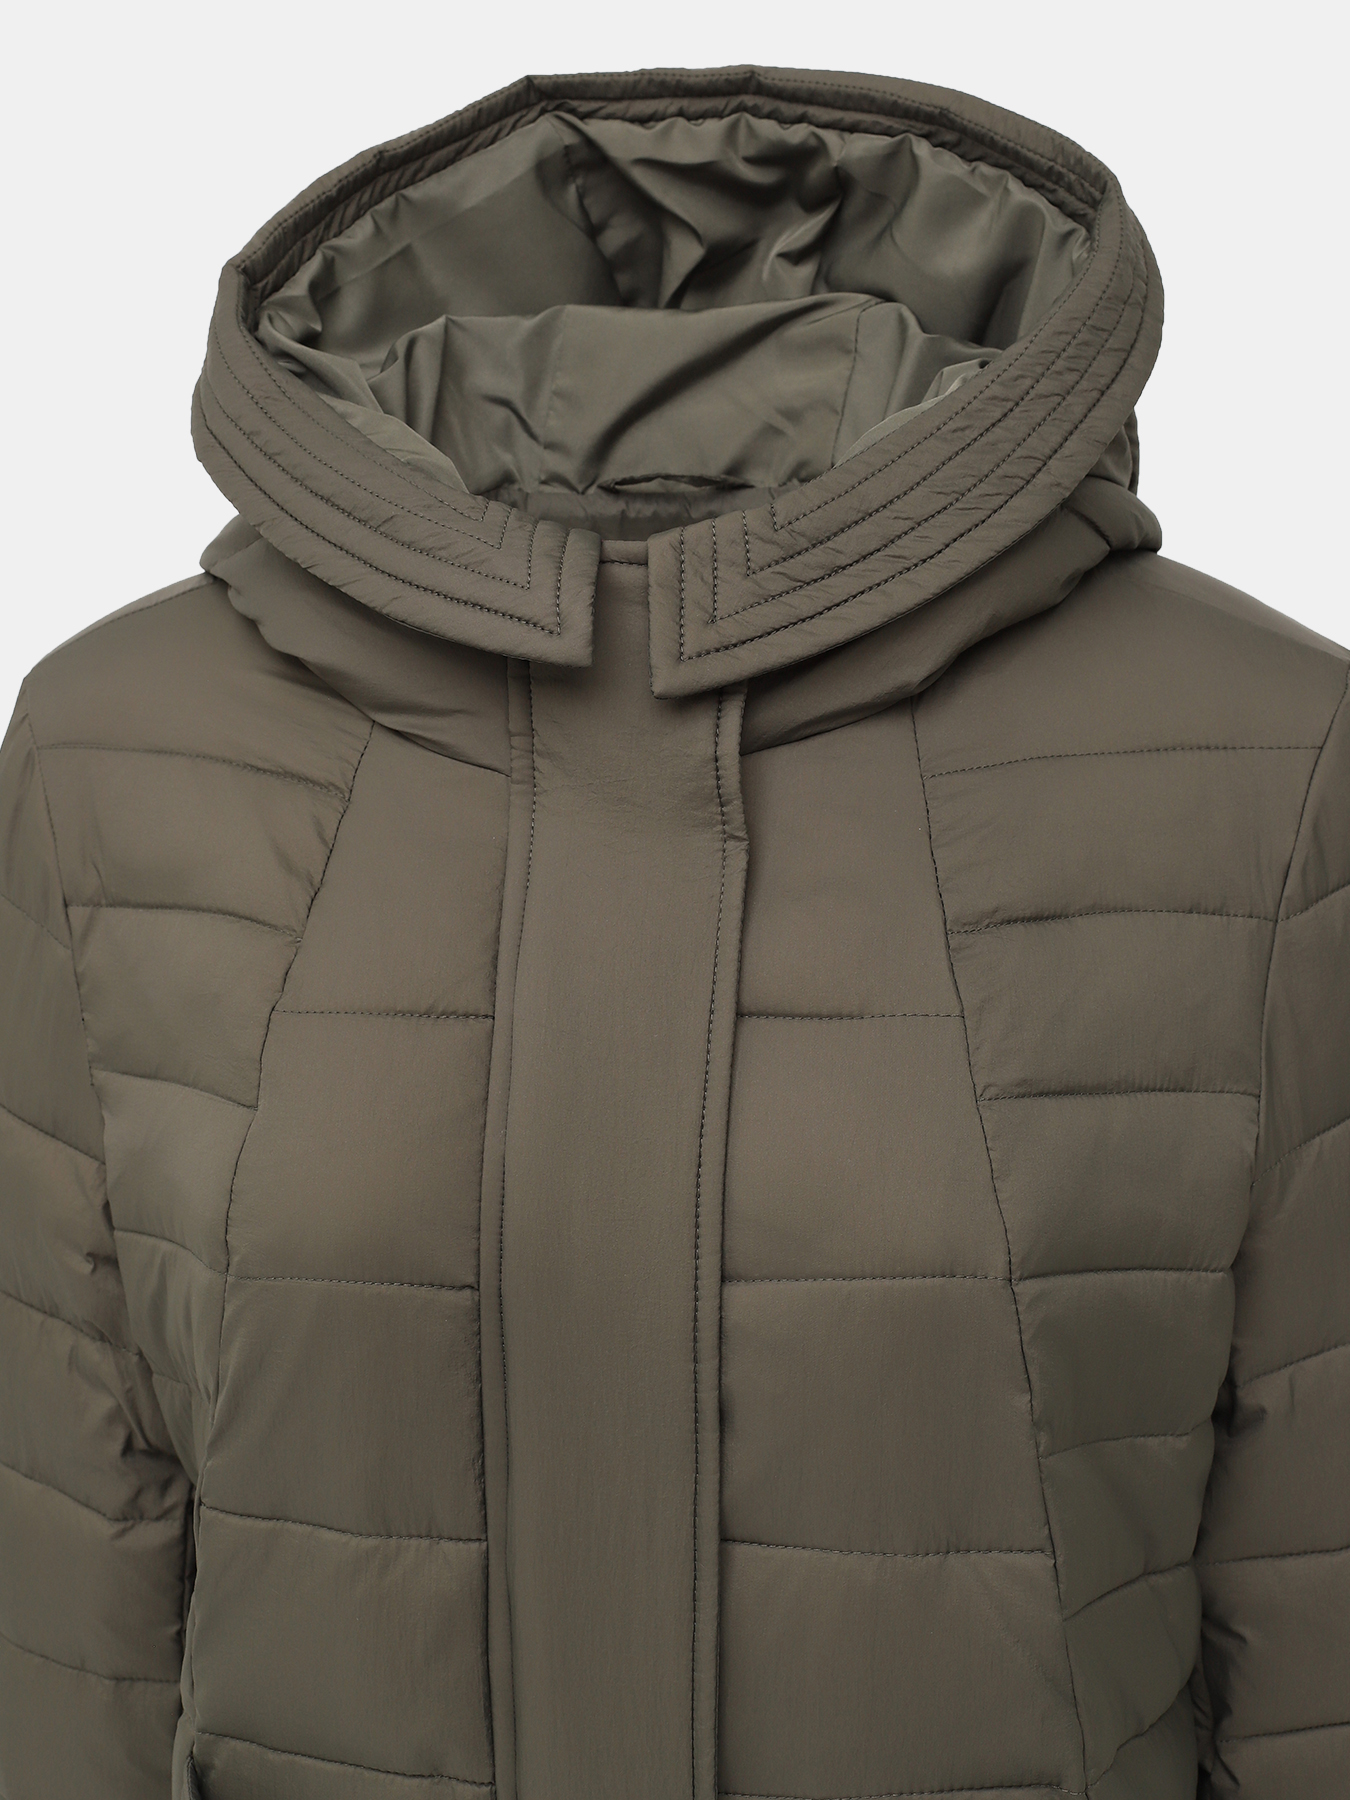 Пальто зимнее Alessandro Manzoni Purpur 384502-241, цвет хаки, размер 46-48 - фото 3